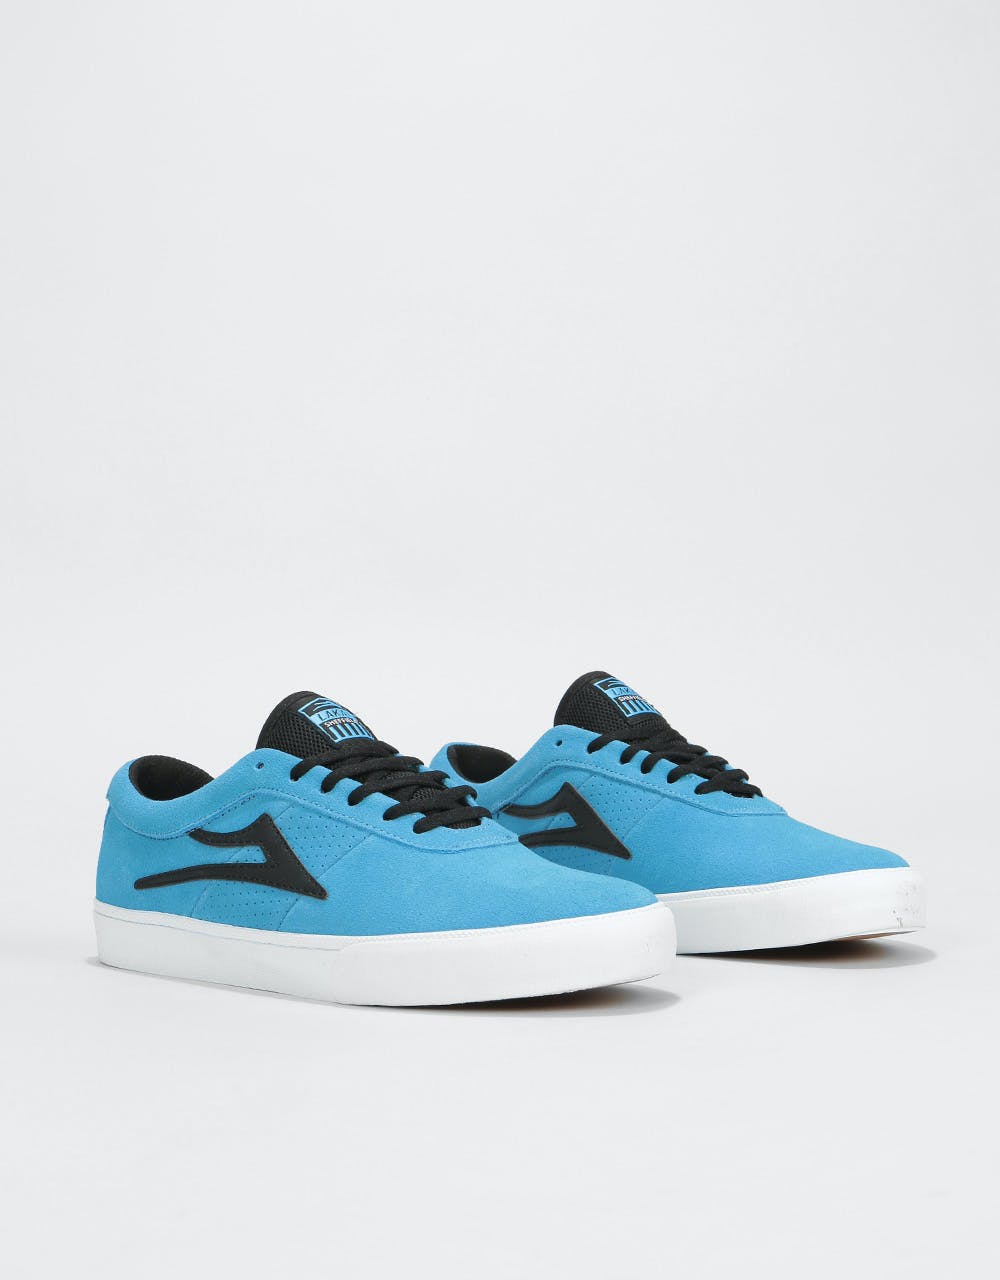 Lakai Sheffield Skate Shoes - Light Blue/Black Suede